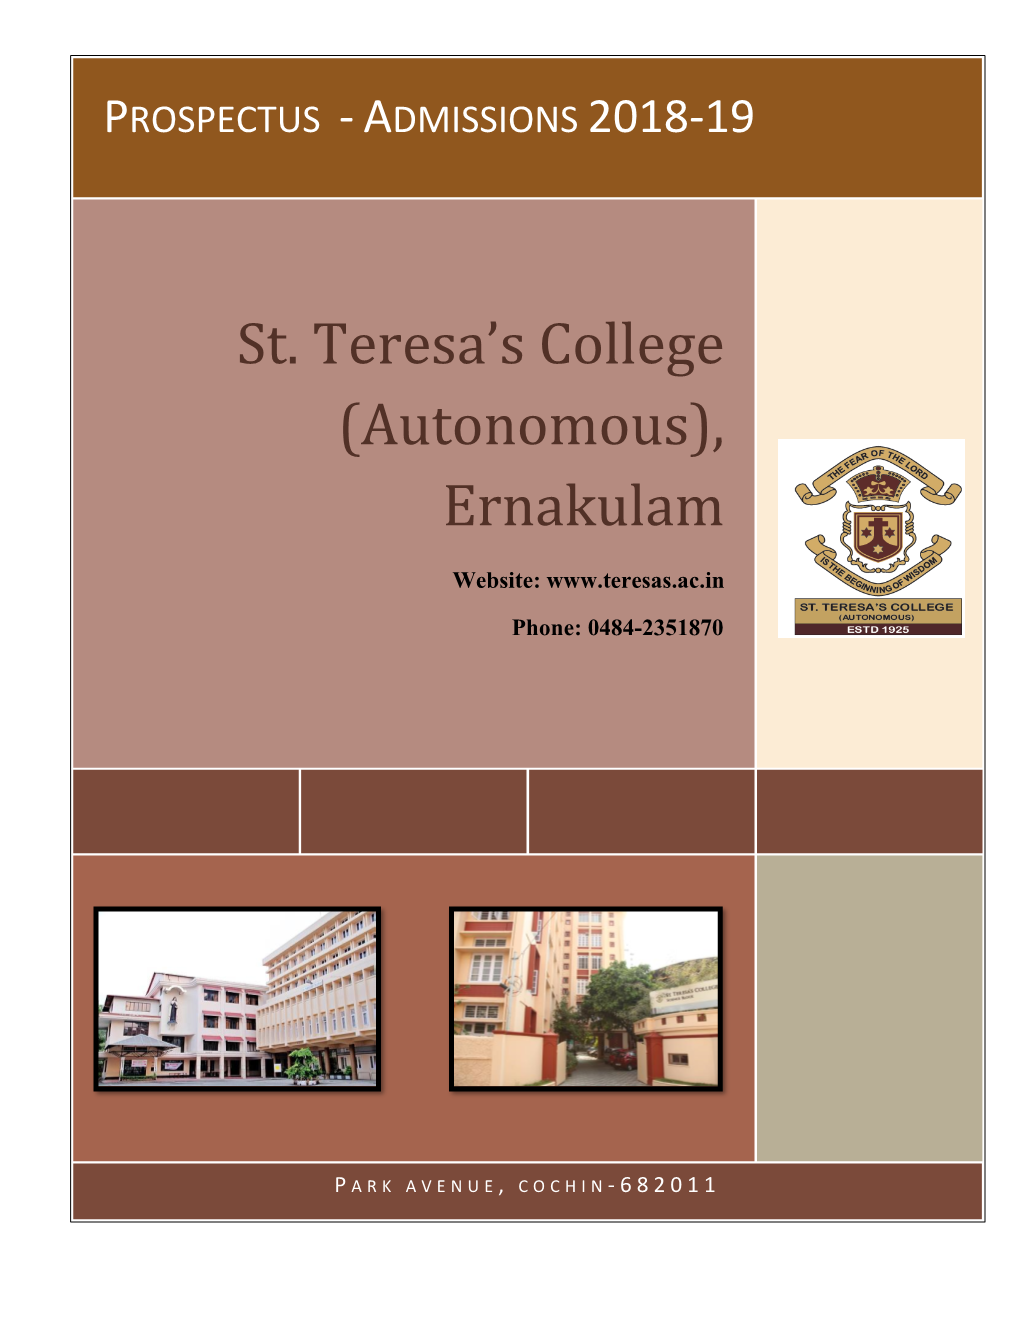 St. Teresa's College (Autonomous), Ernakulam